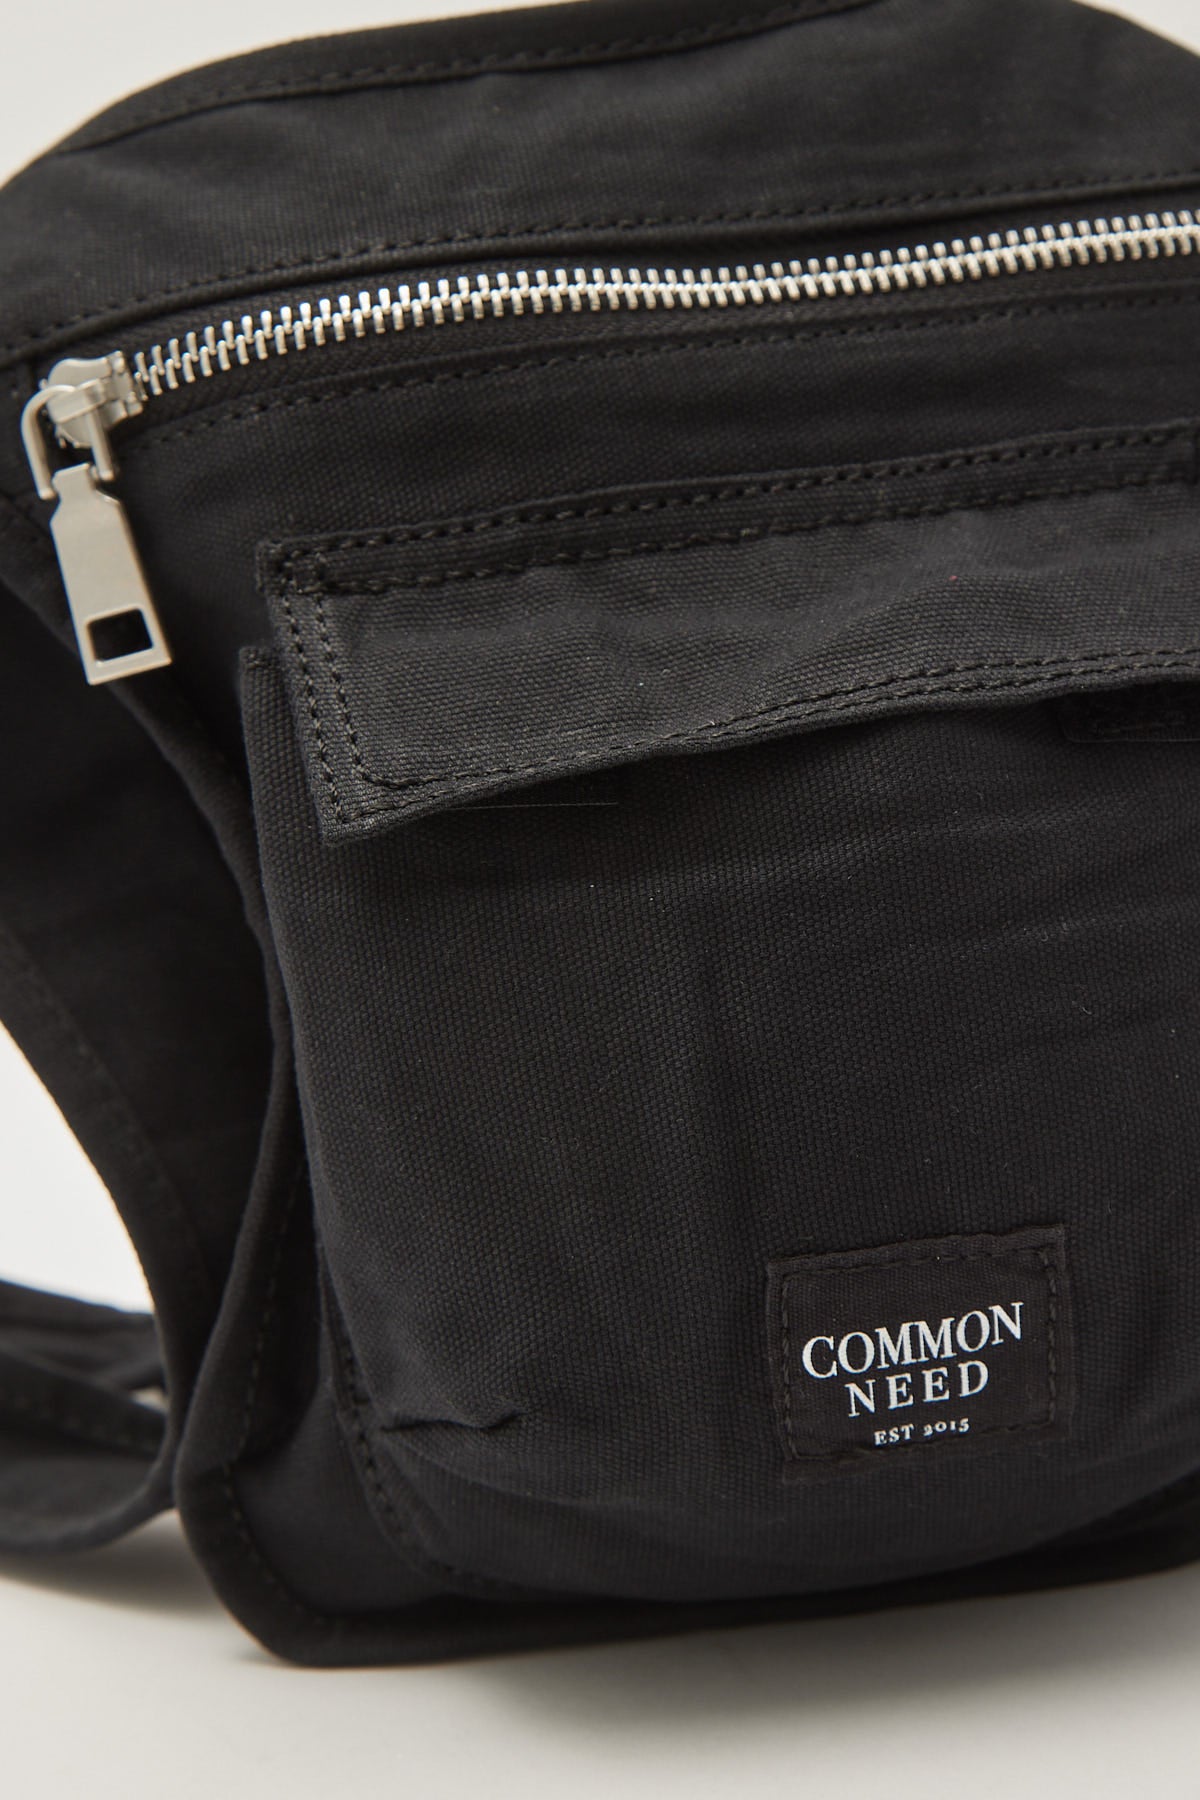 Common Need Crossbody Bag Black